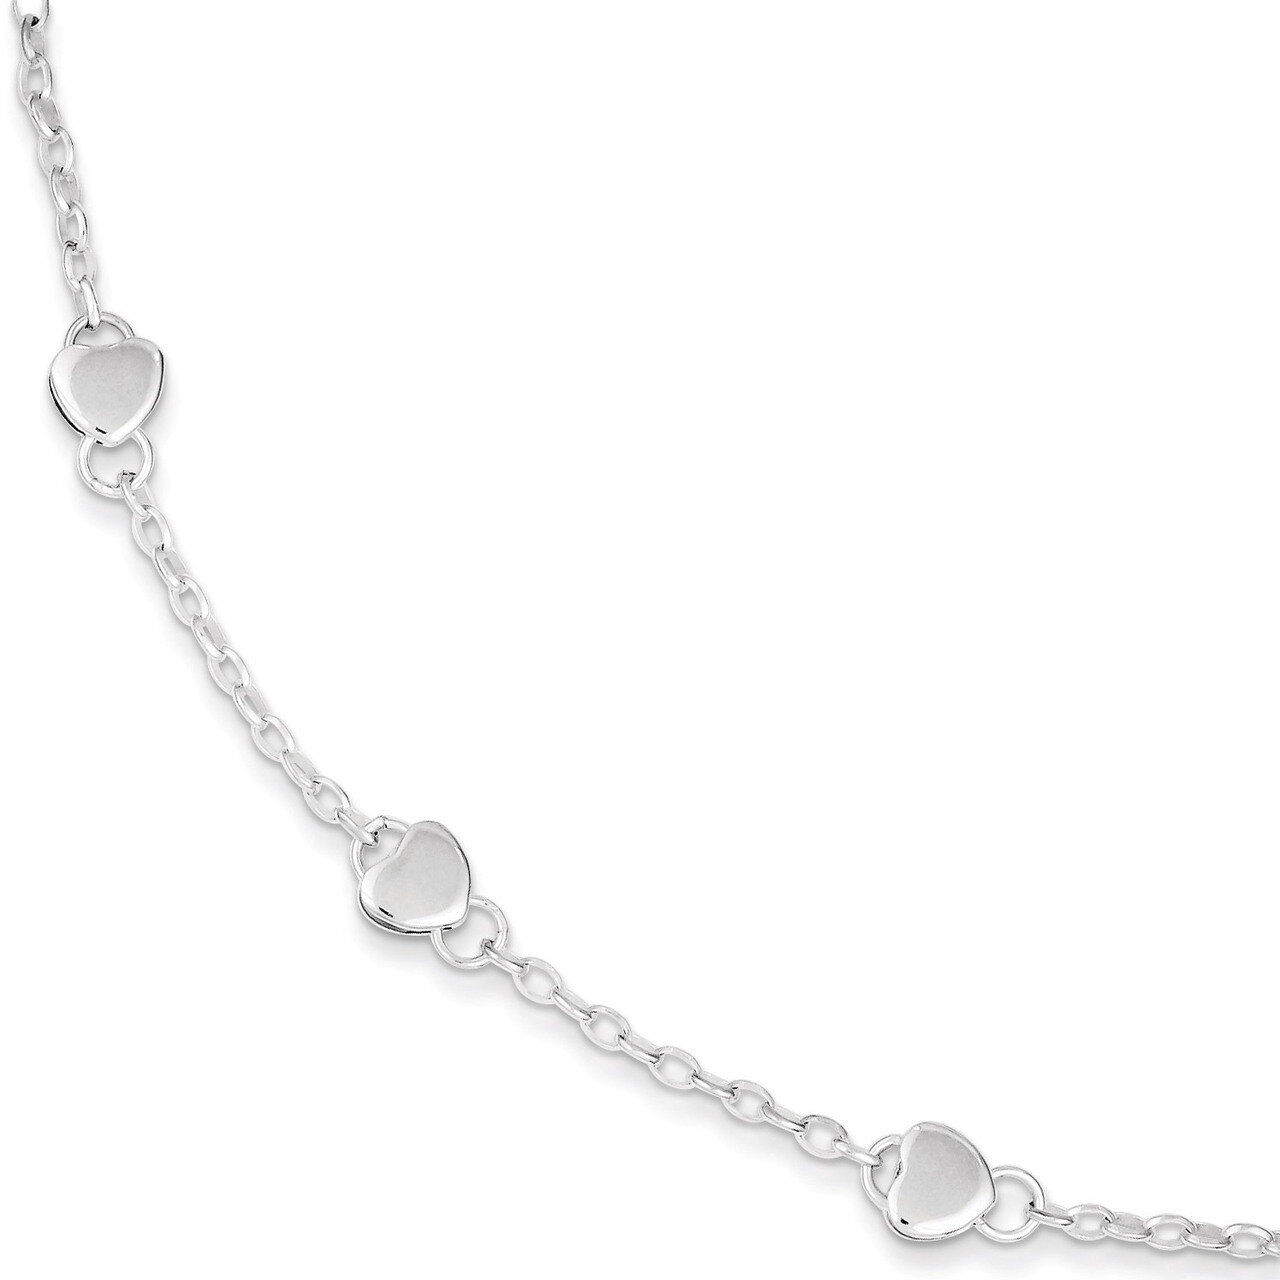 6 Inch Heart Childs Bracelet Sterling Silver QG1445-6